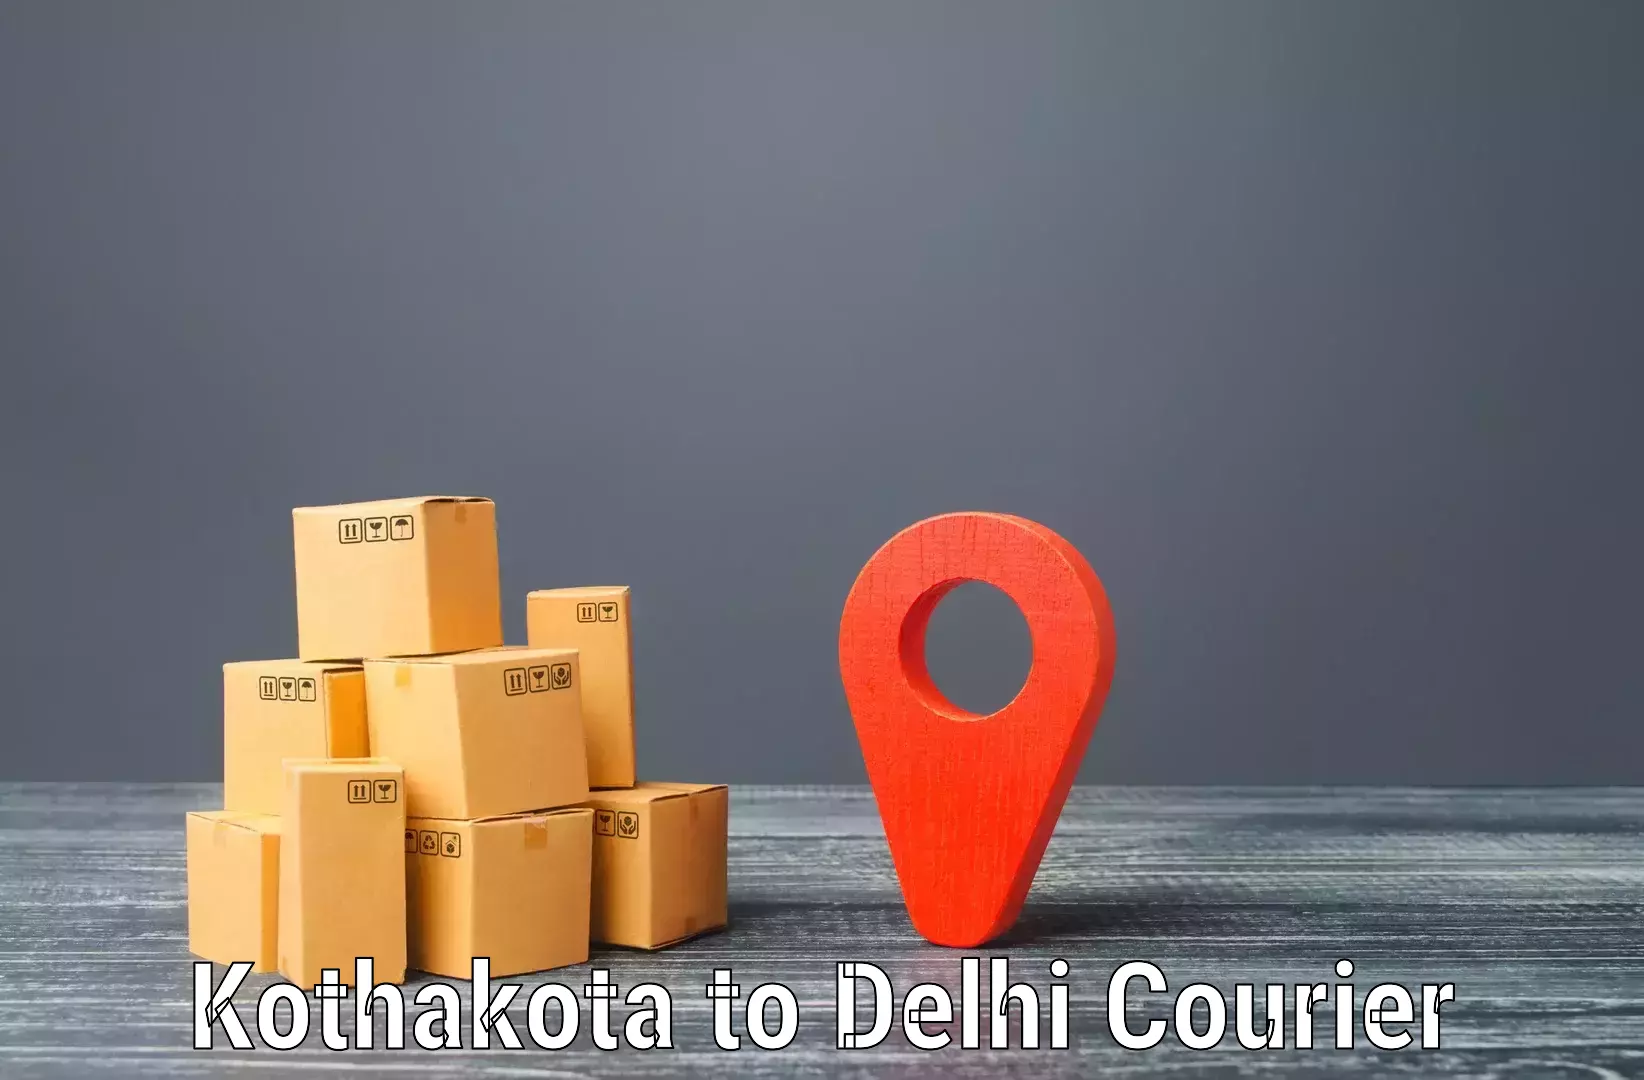 State-of-the-art courier technology Kothakota to University of Delhi